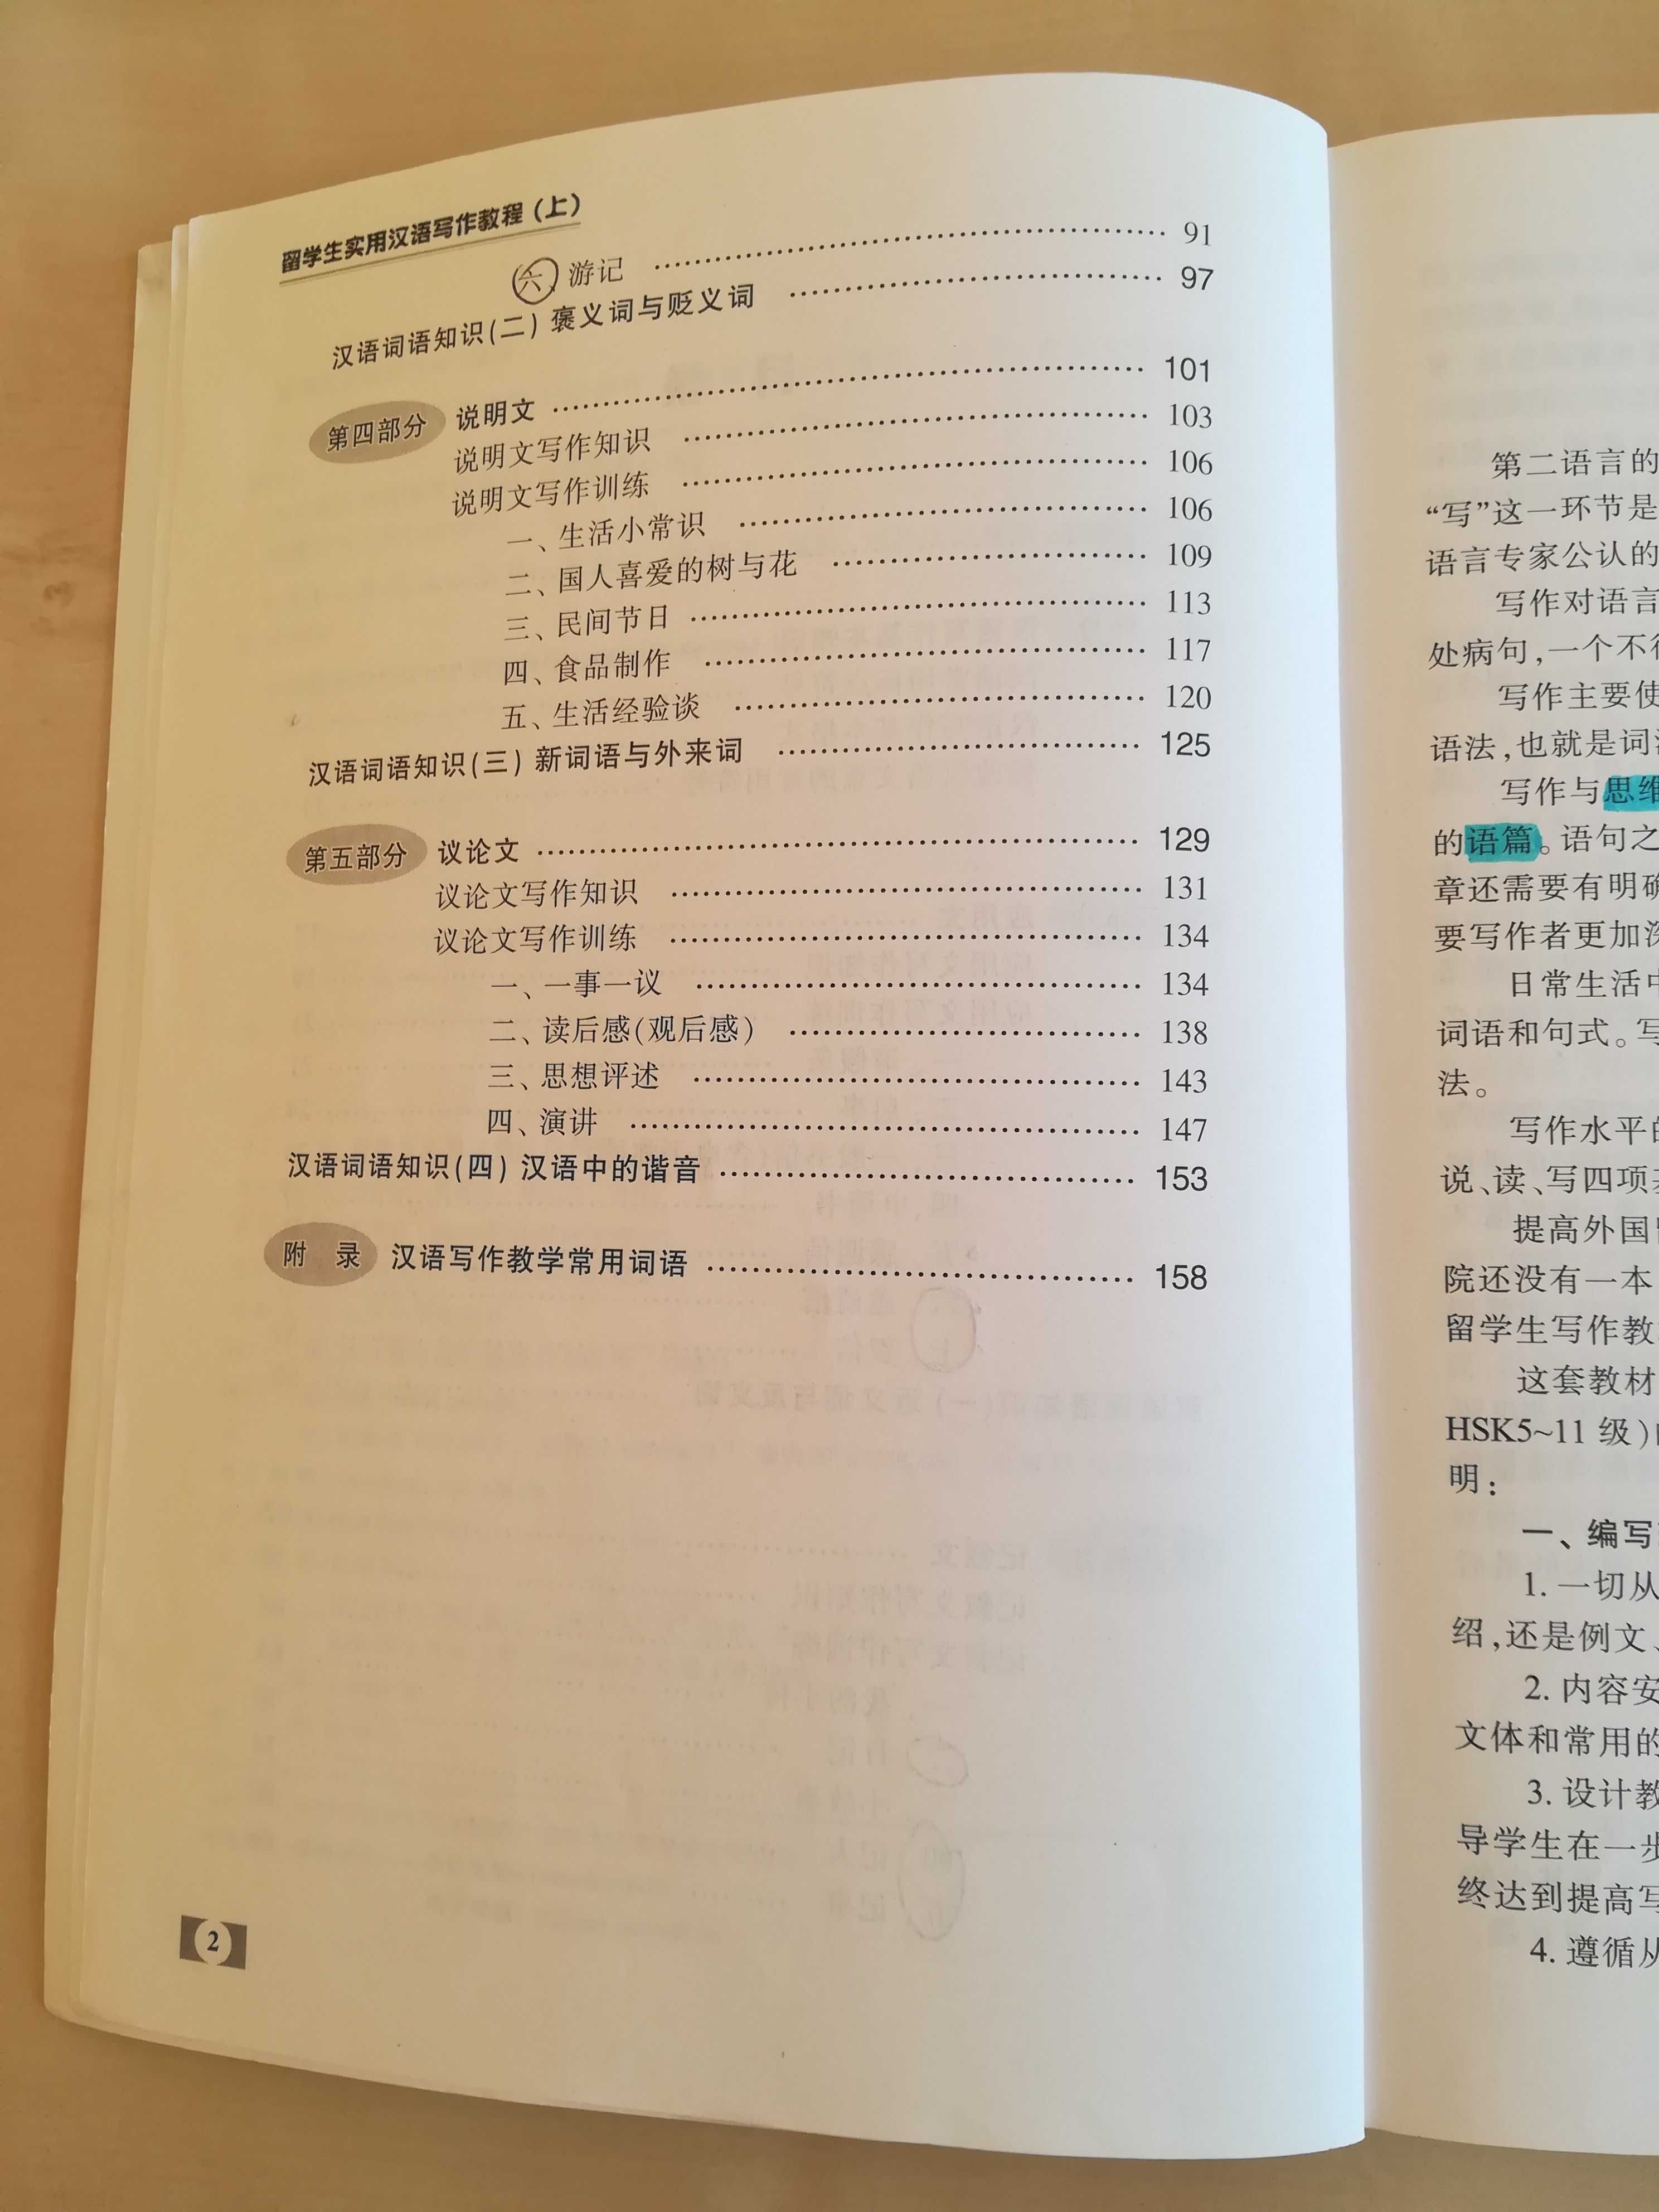 留学生实用汉语写作教程 (上) A Practical Chinese Writing Course for Foreigners